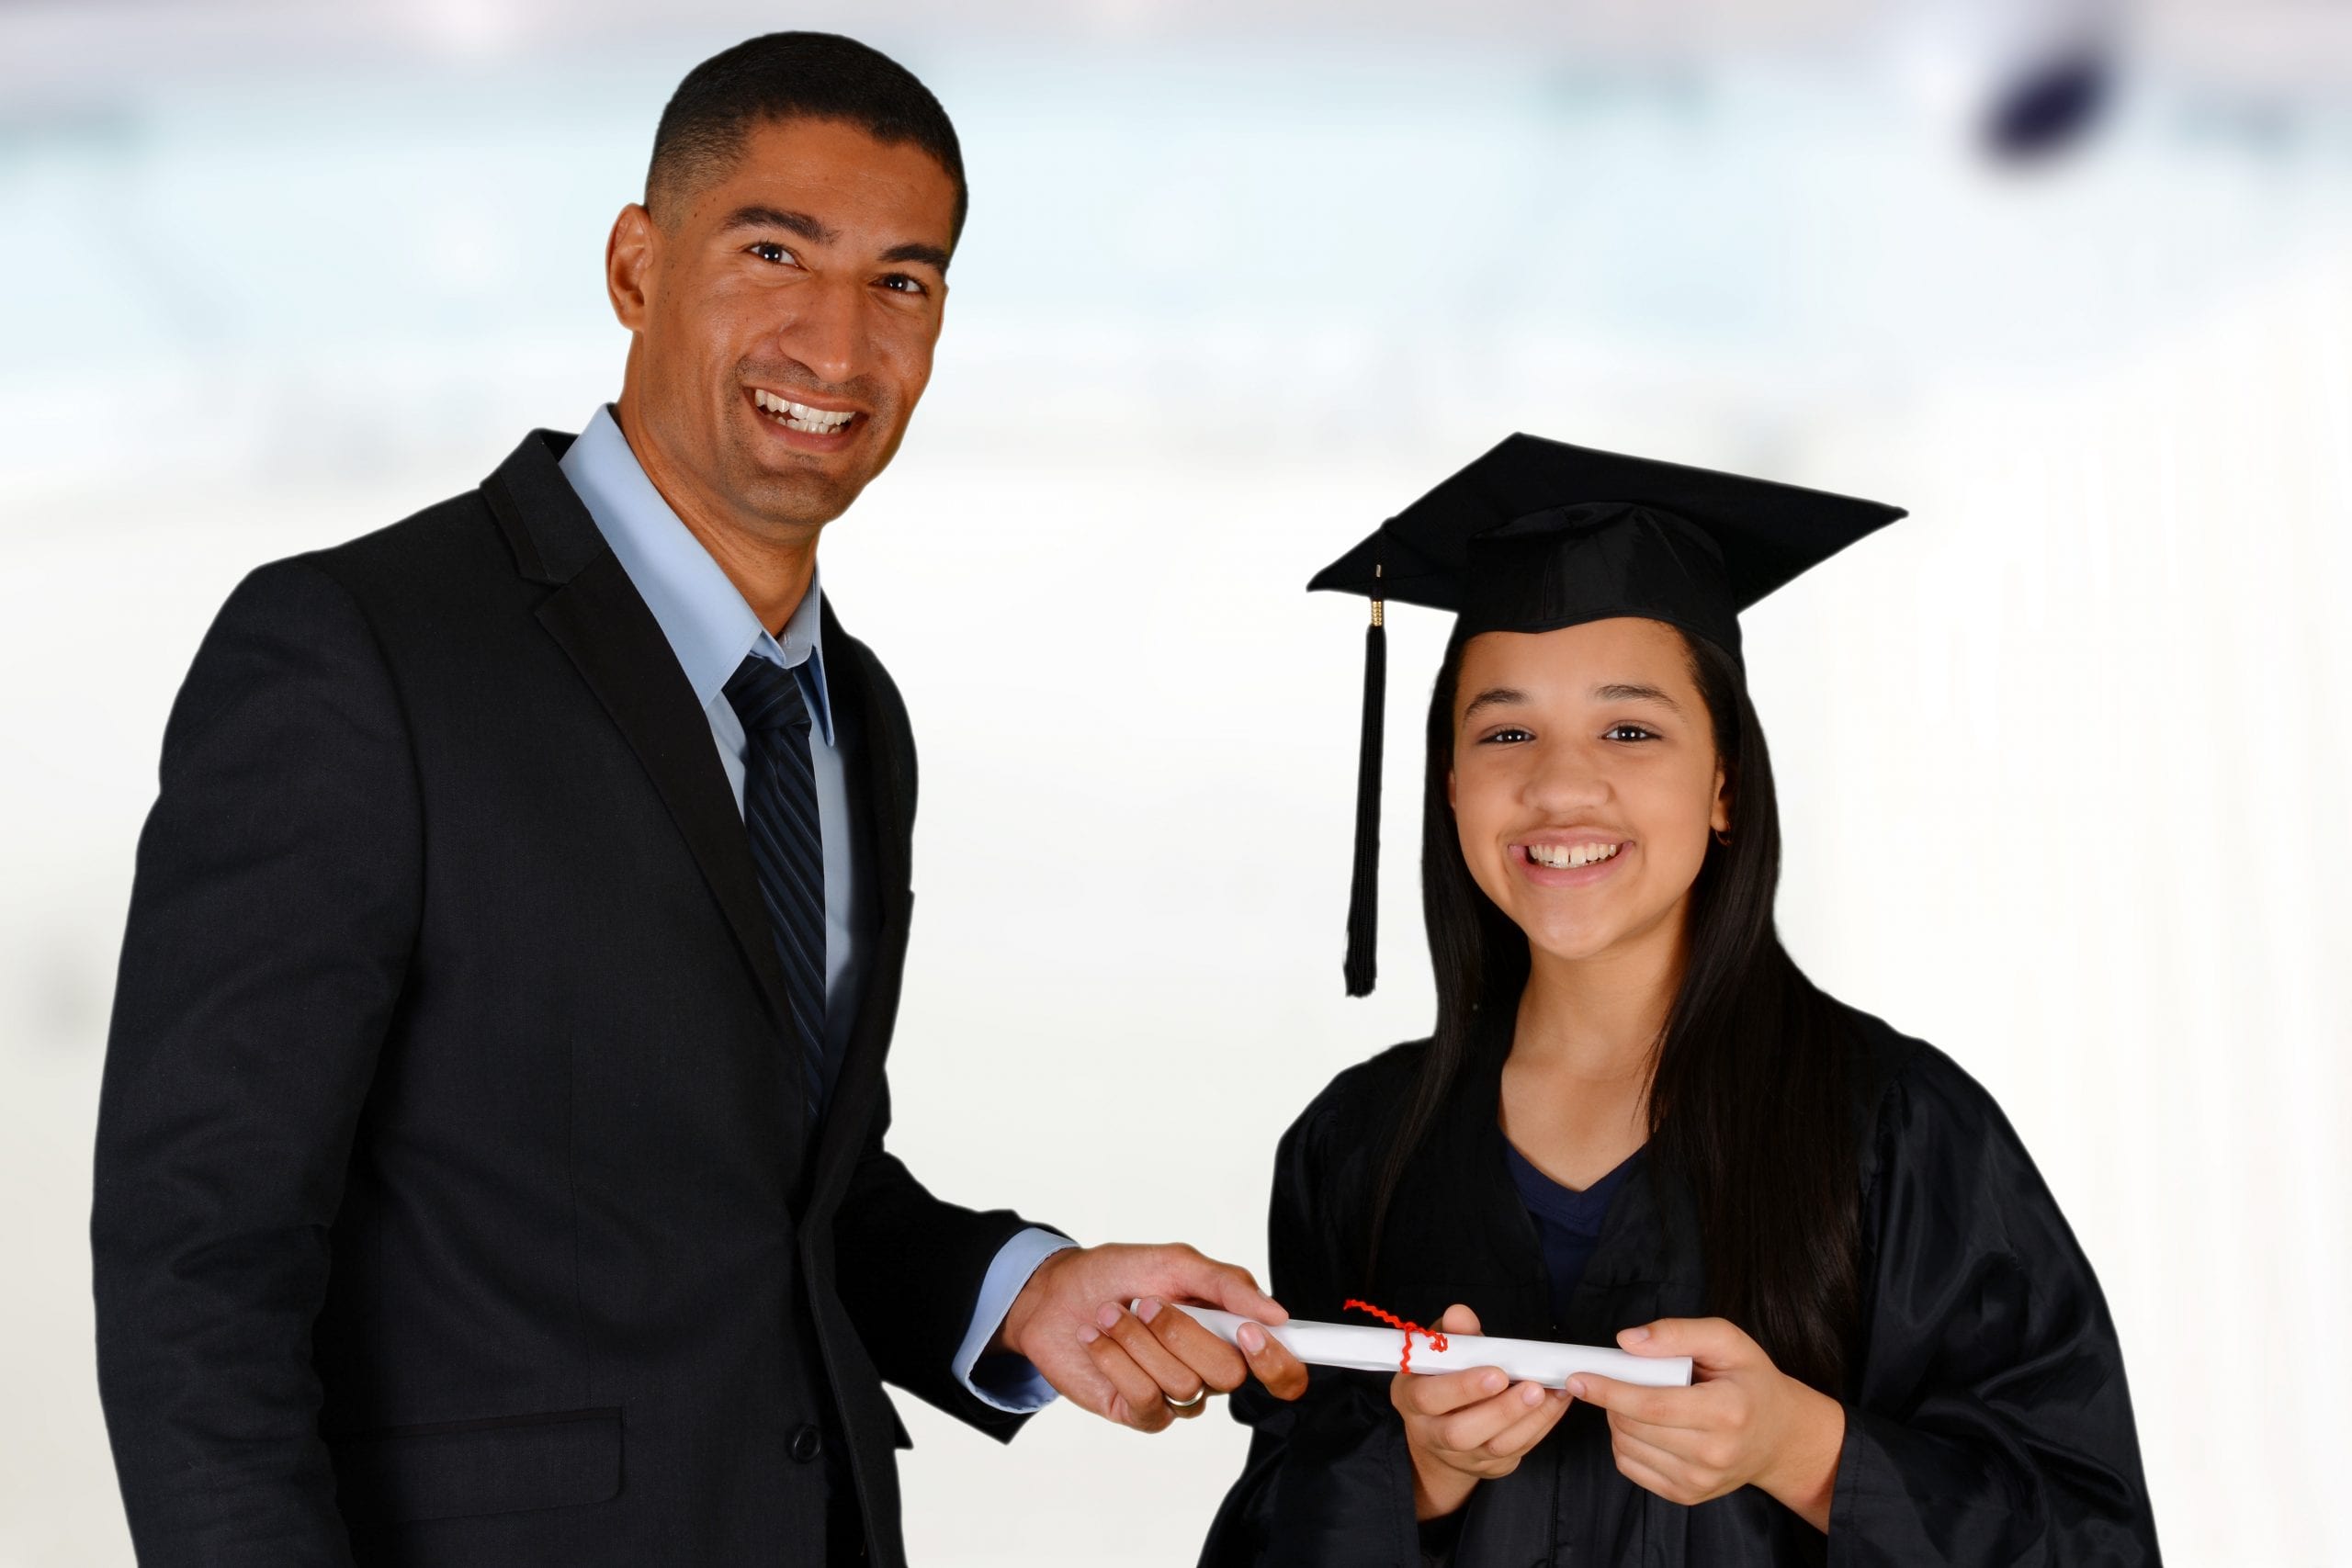 A Principal handing a graduate her diploma